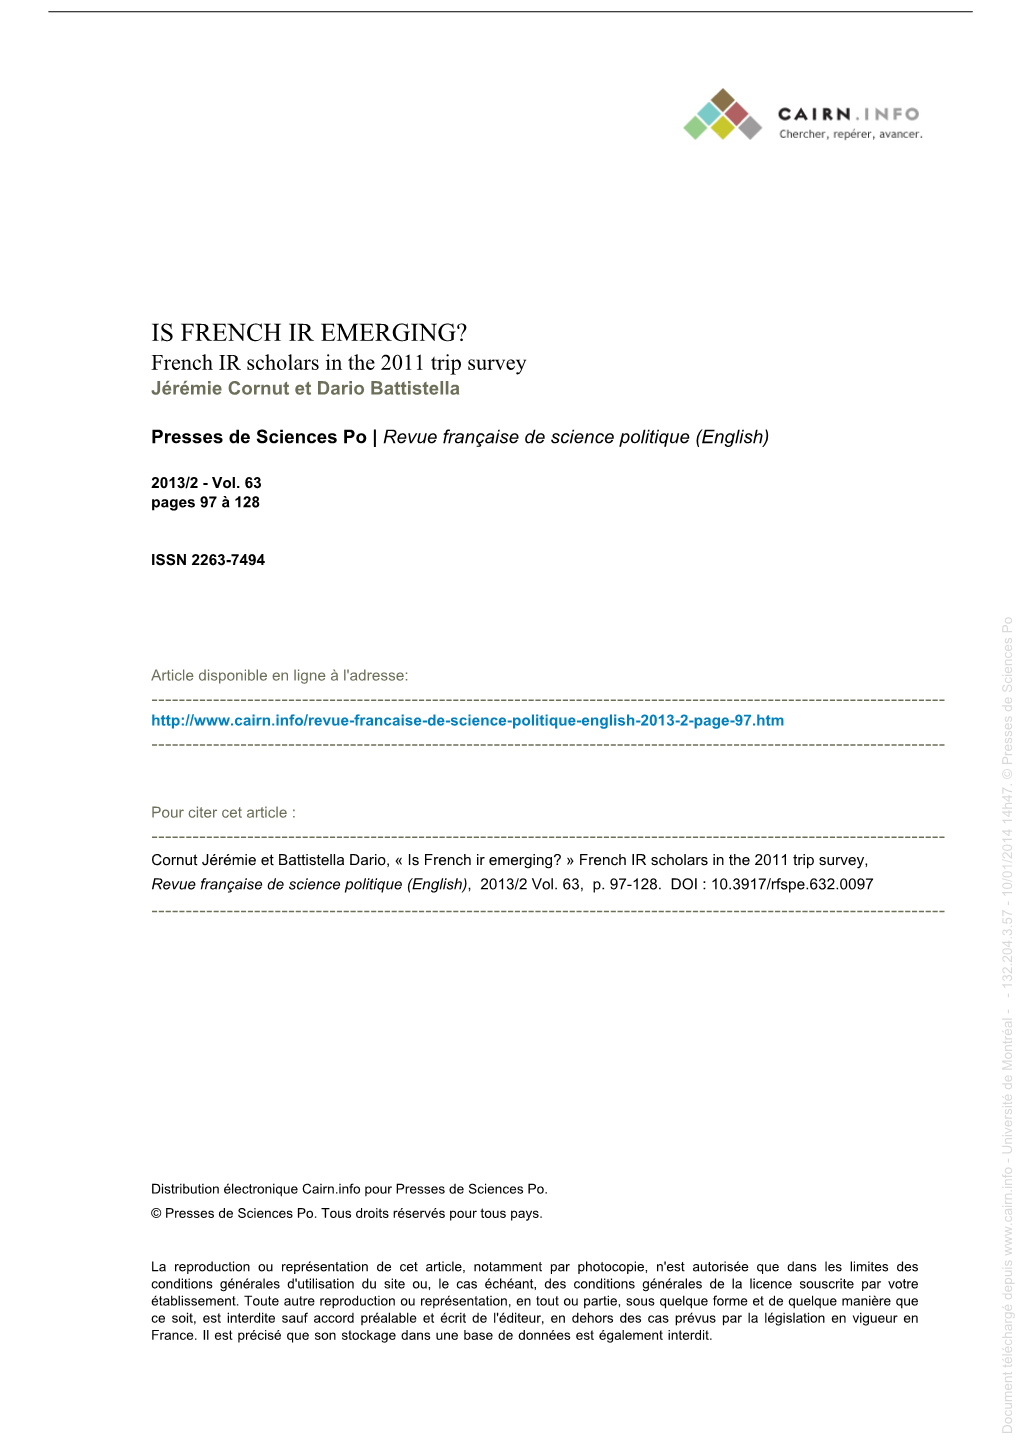 IS FRENCH IR EMERGING? French IR Scholars in the 2011 Trip Survey Jérémie Cornut Et Dario Battistella